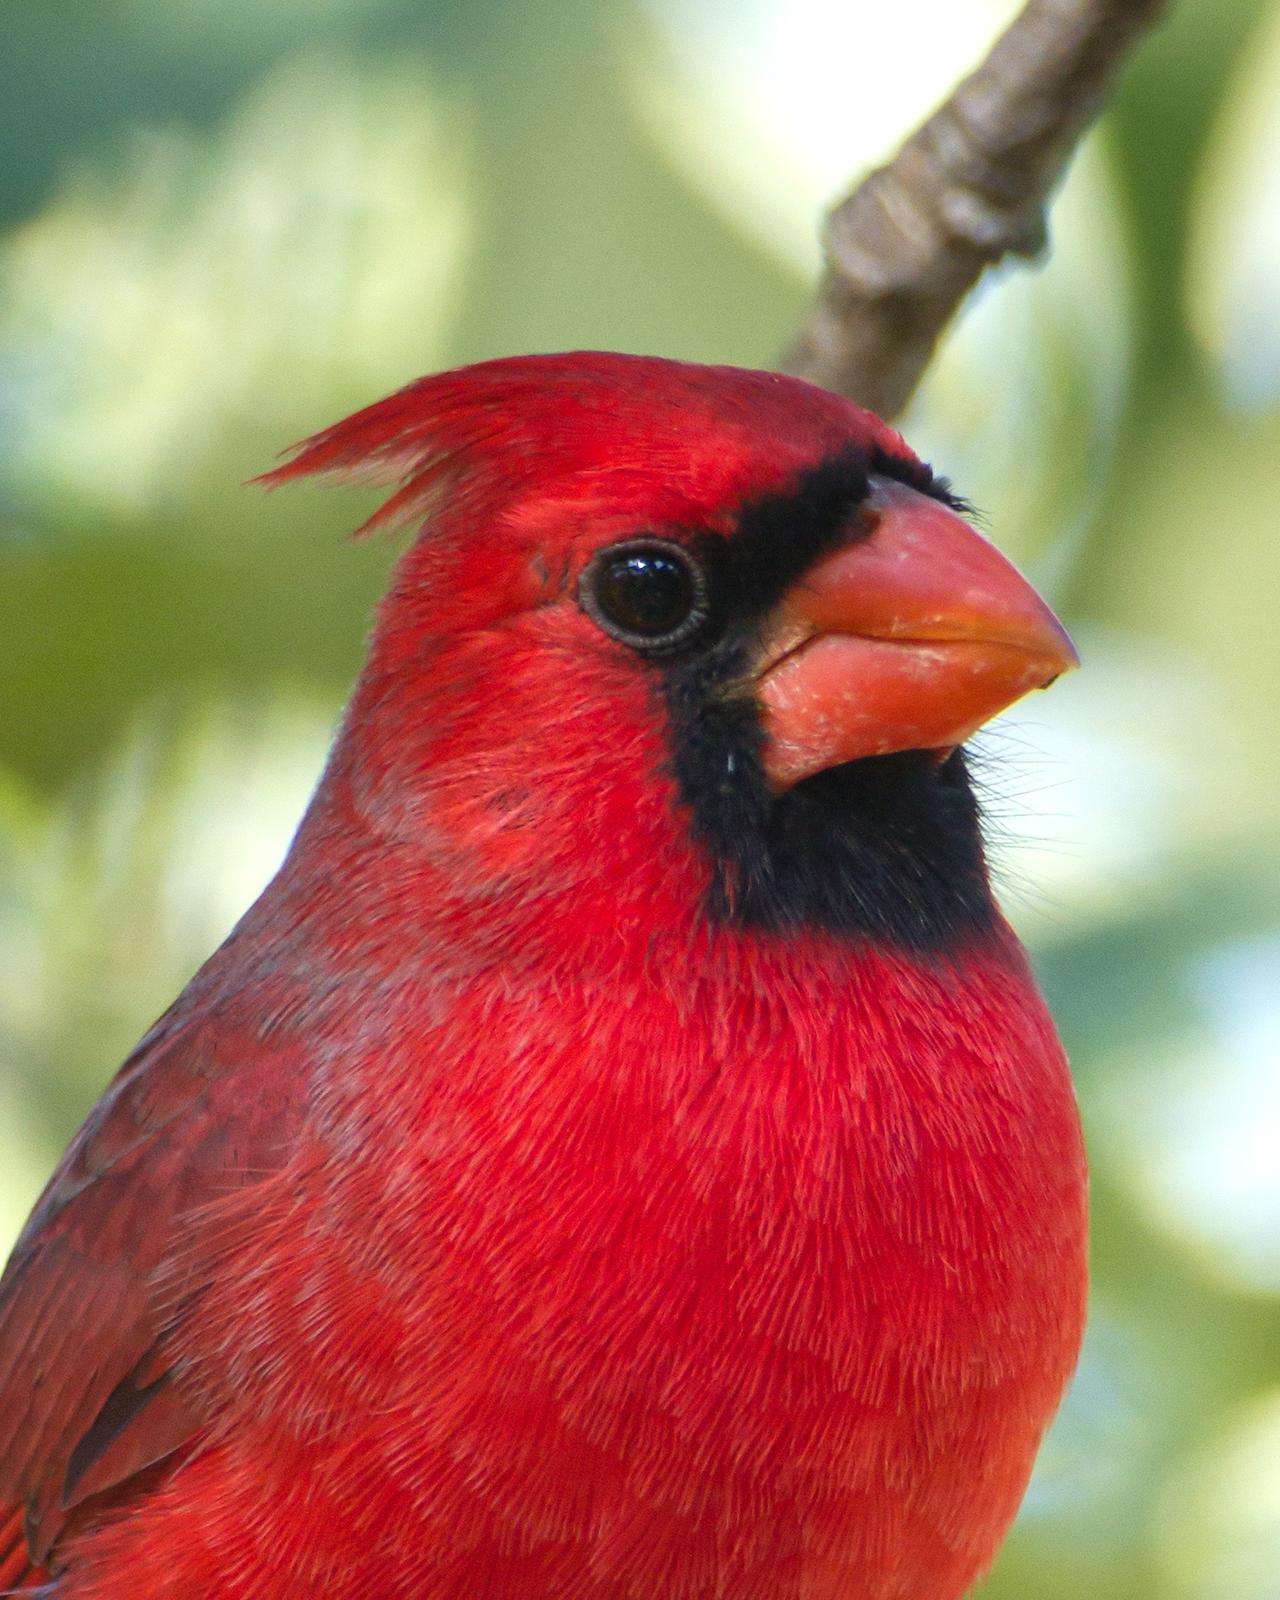 Northern Cardinal Photo by Bill Adams